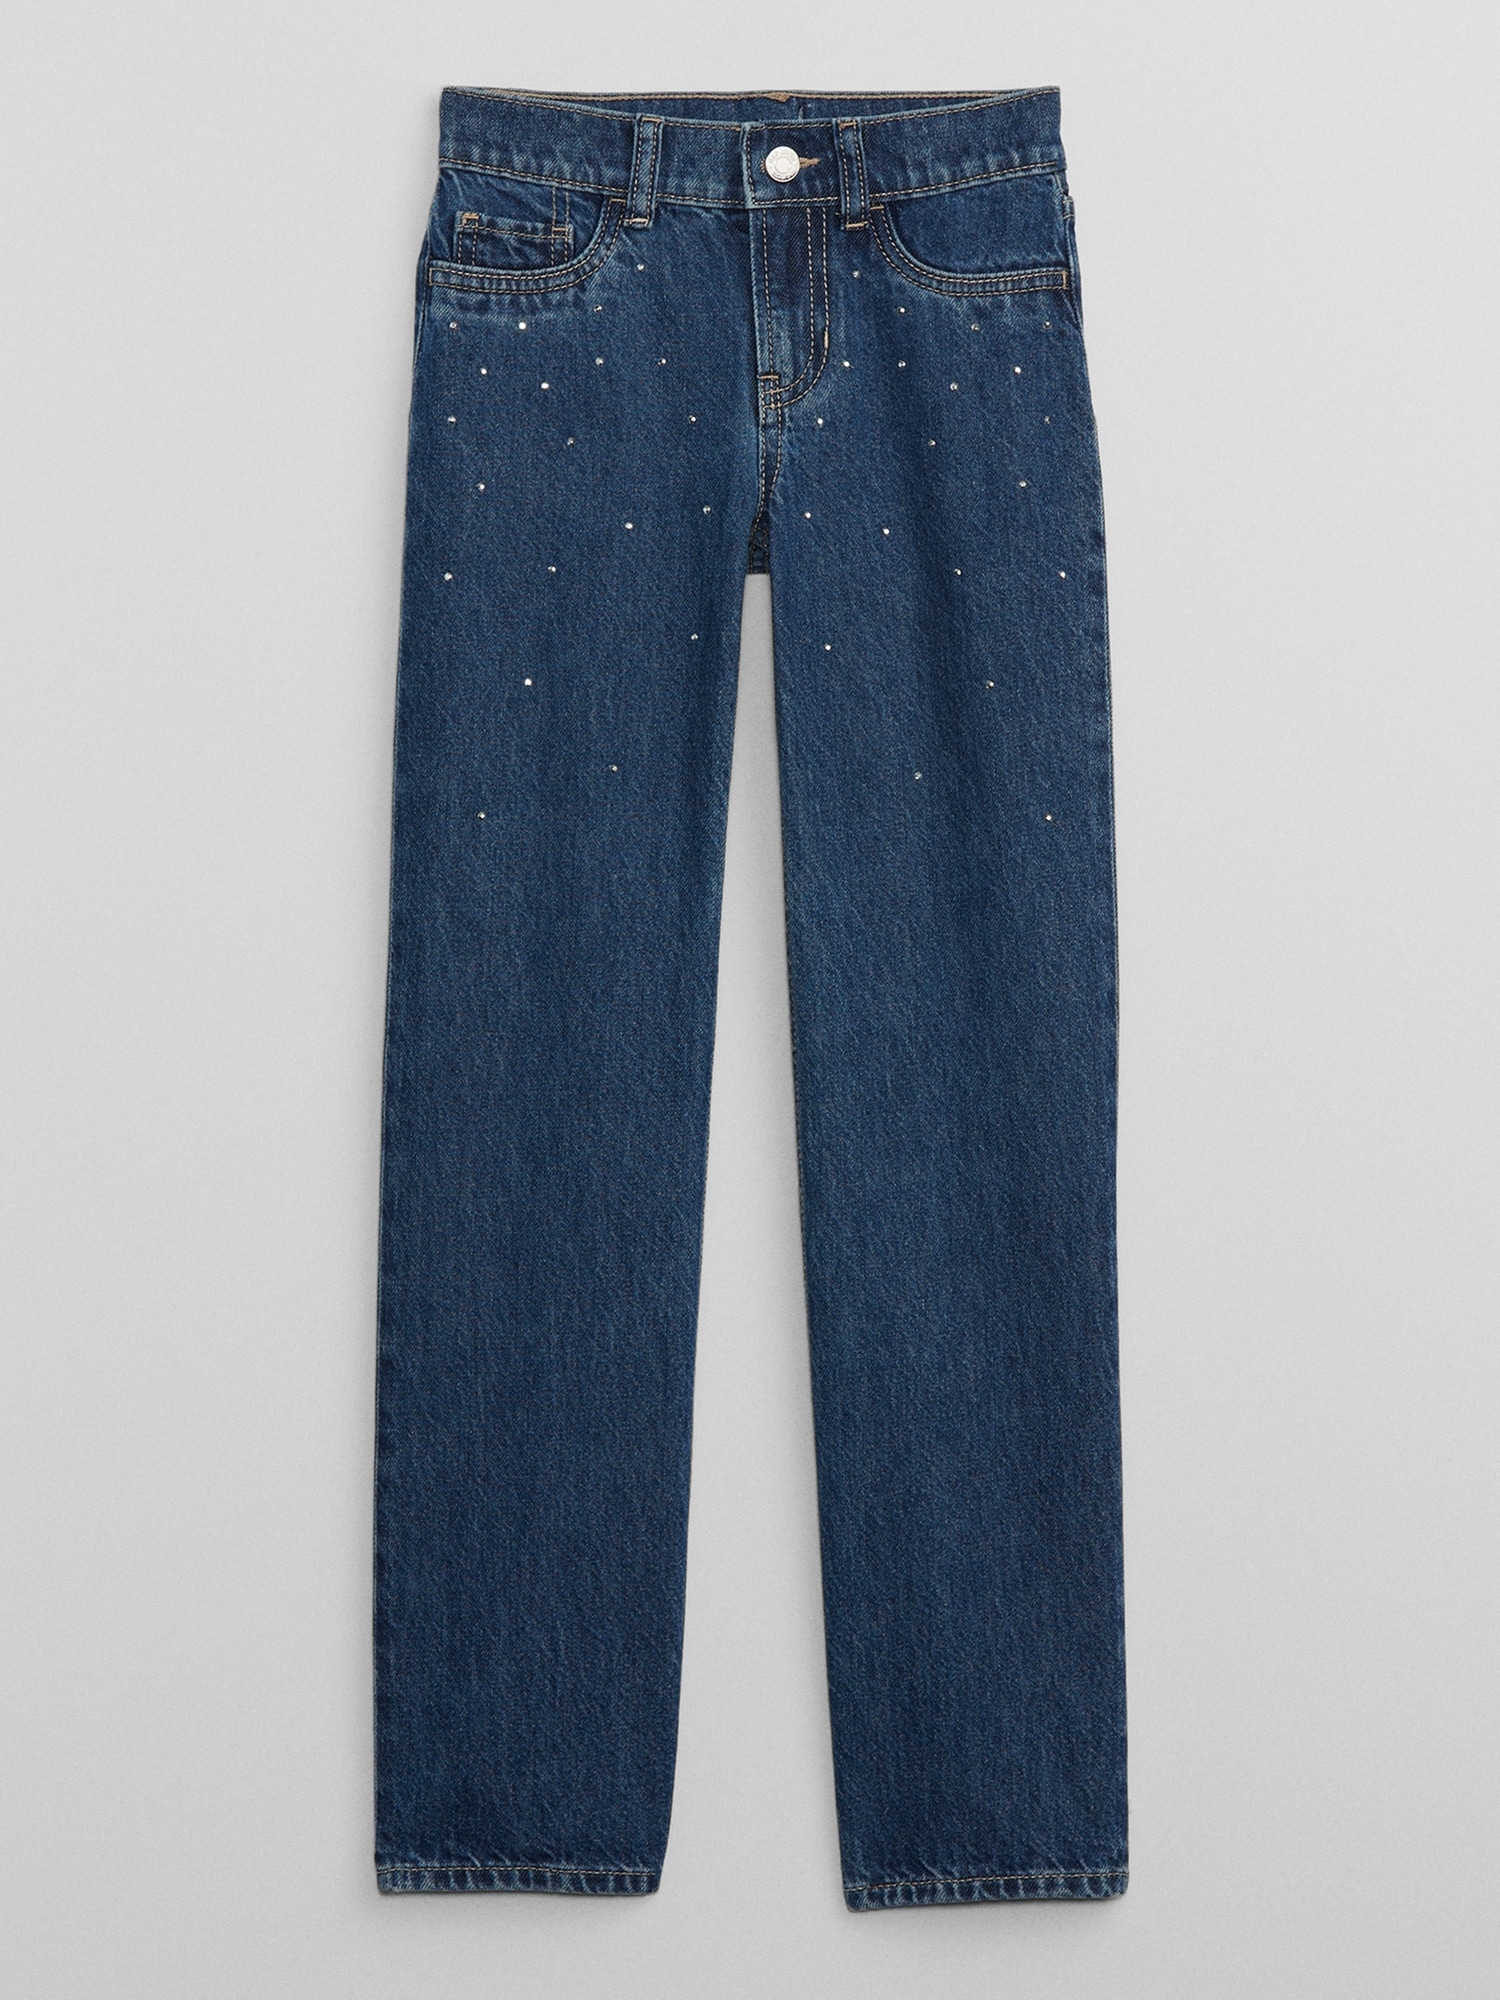 Rhinestone Jeans 